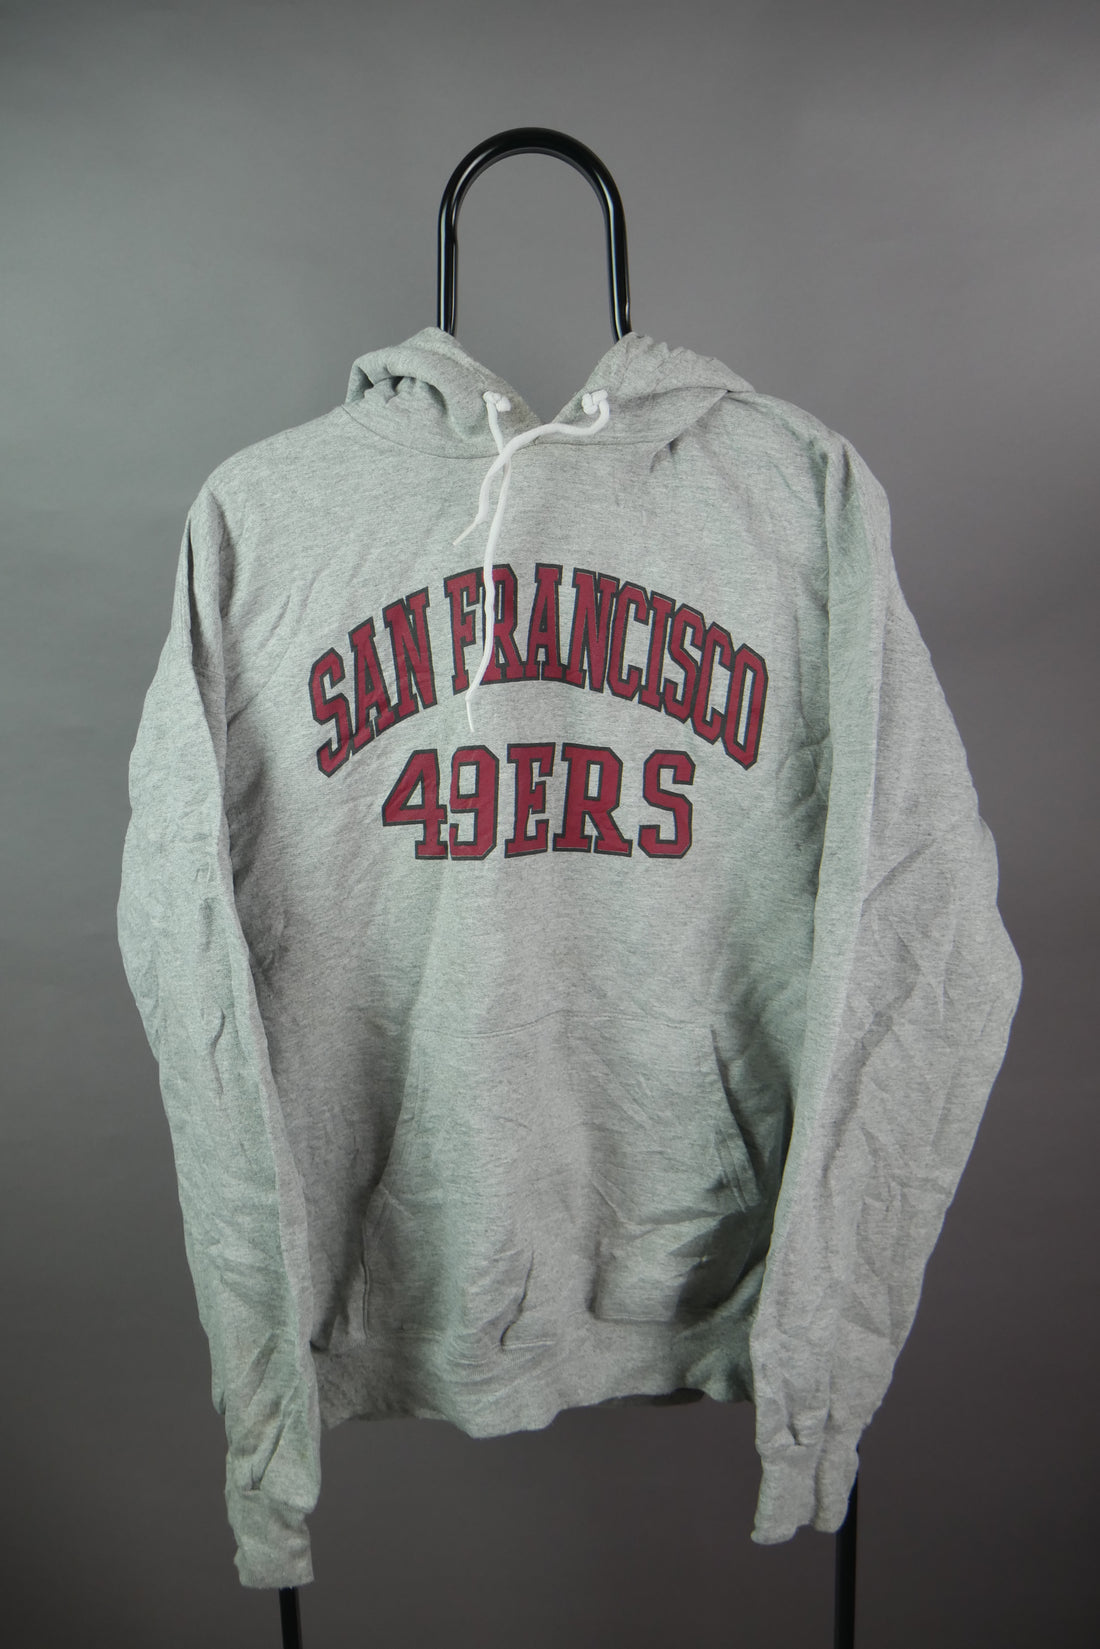 The NFL San Francisco 49ERS Graphic Sweatshirt (L)